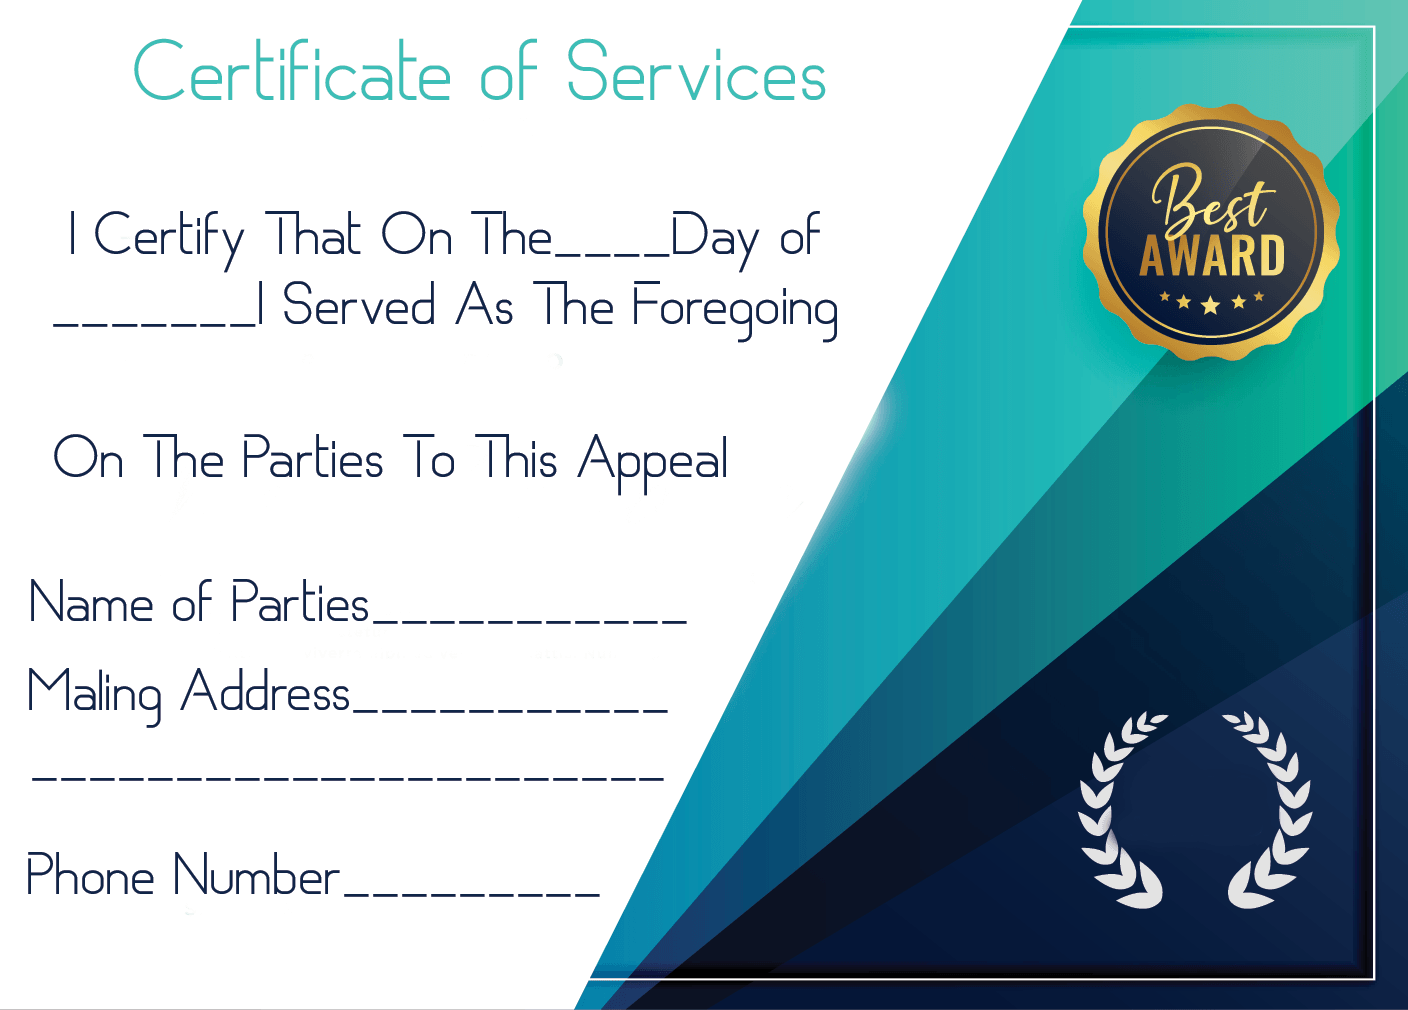 Certificate of Service Template